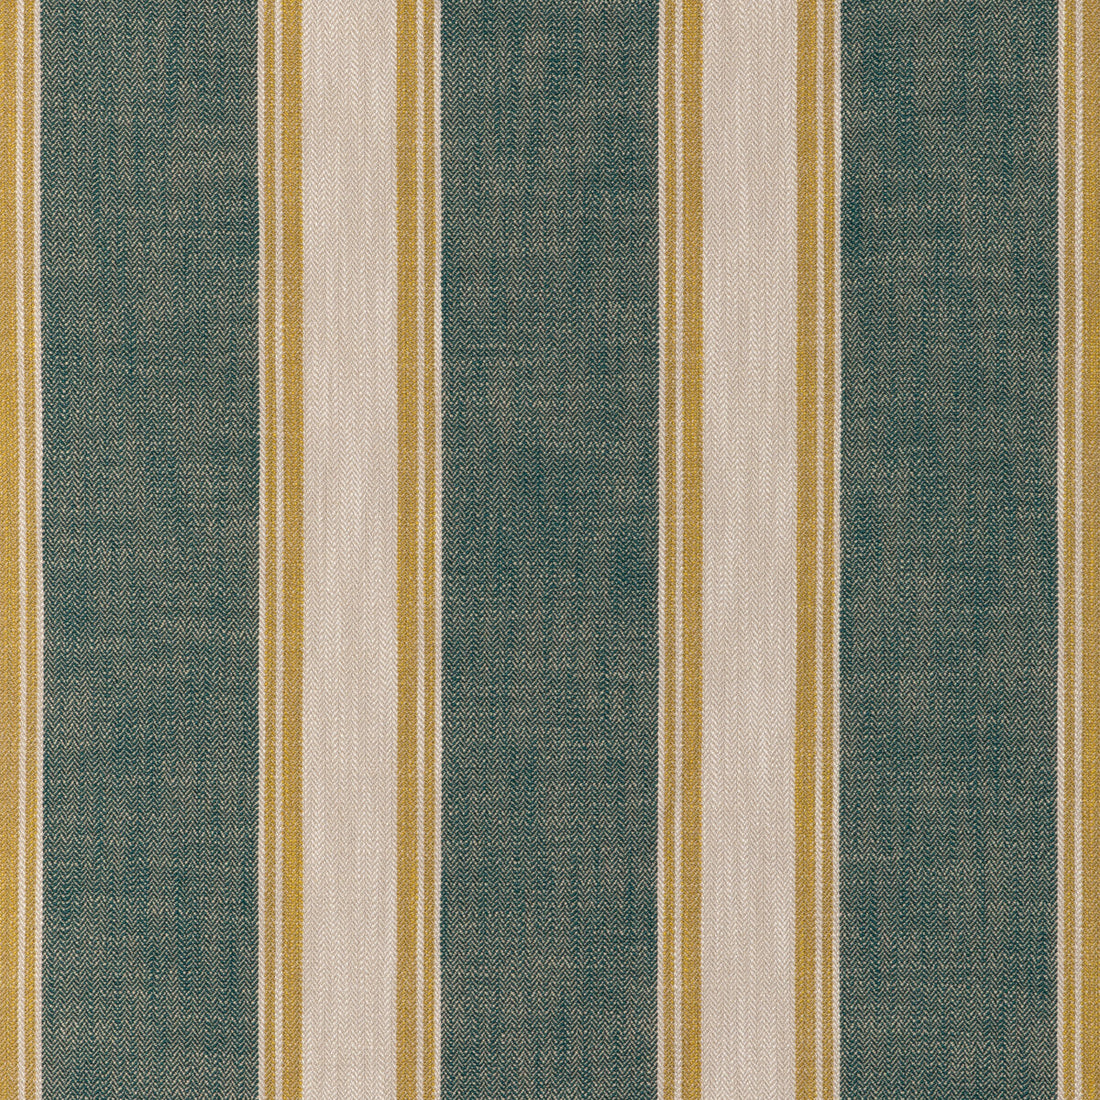 La Riviera Stripe fabric in marine color - pattern 8024120.353.0 - by Brunschwig &amp; Fils in the Les Ensembliers L&